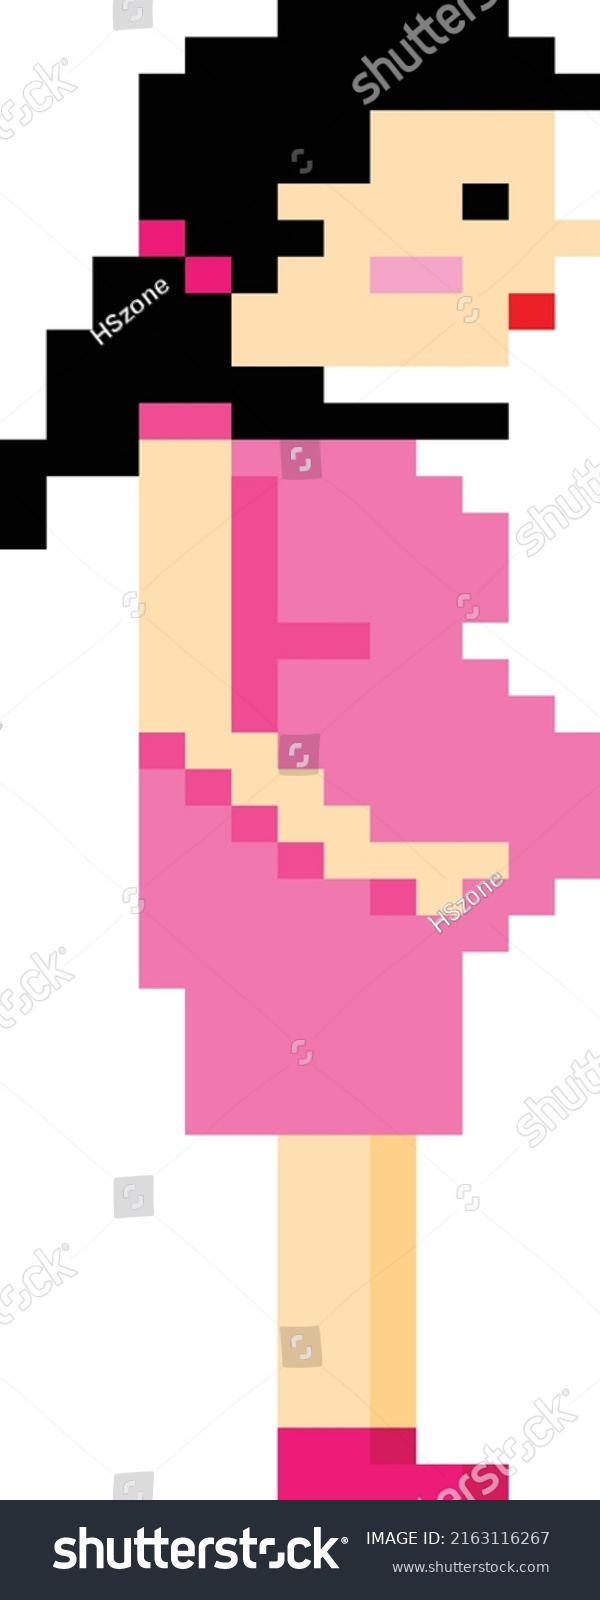 Pregnant Lady Pixel Art Vector Illustration Stock Vector Royalty Free